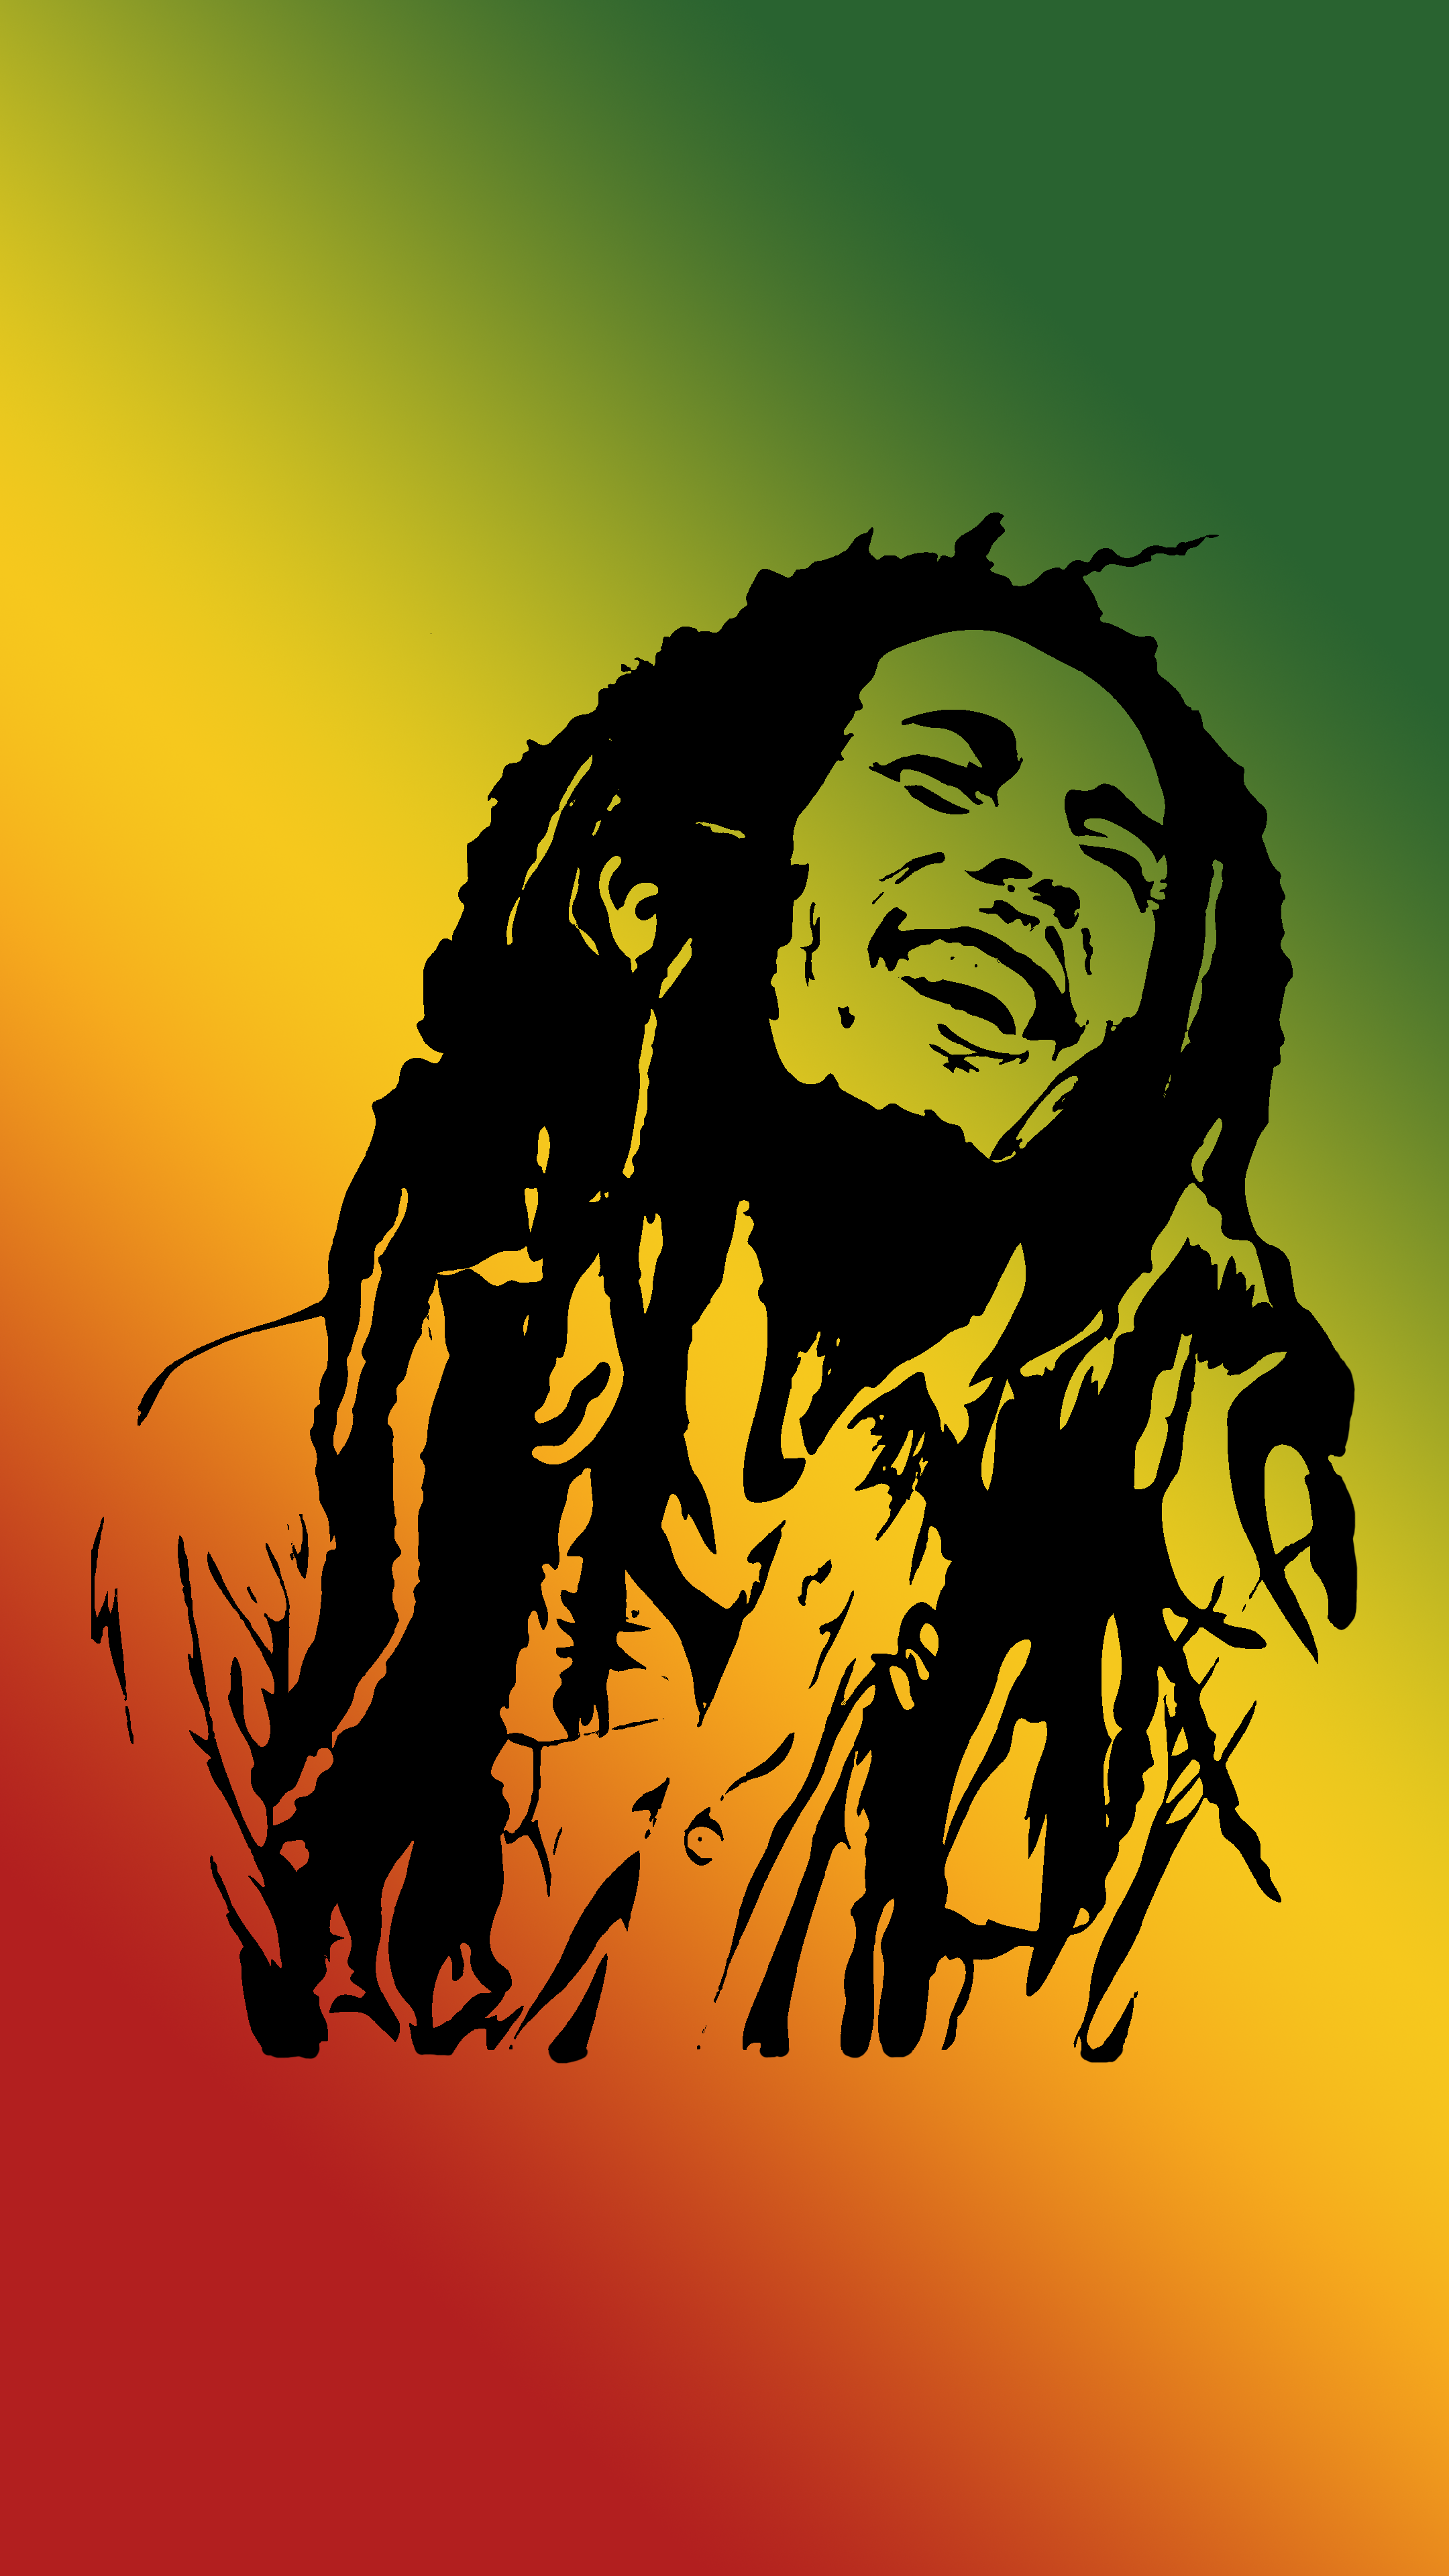 Bob Marley 4K Wallpaper for mobile phones (9:16) by VojtaNesvadba on  DeviantArt